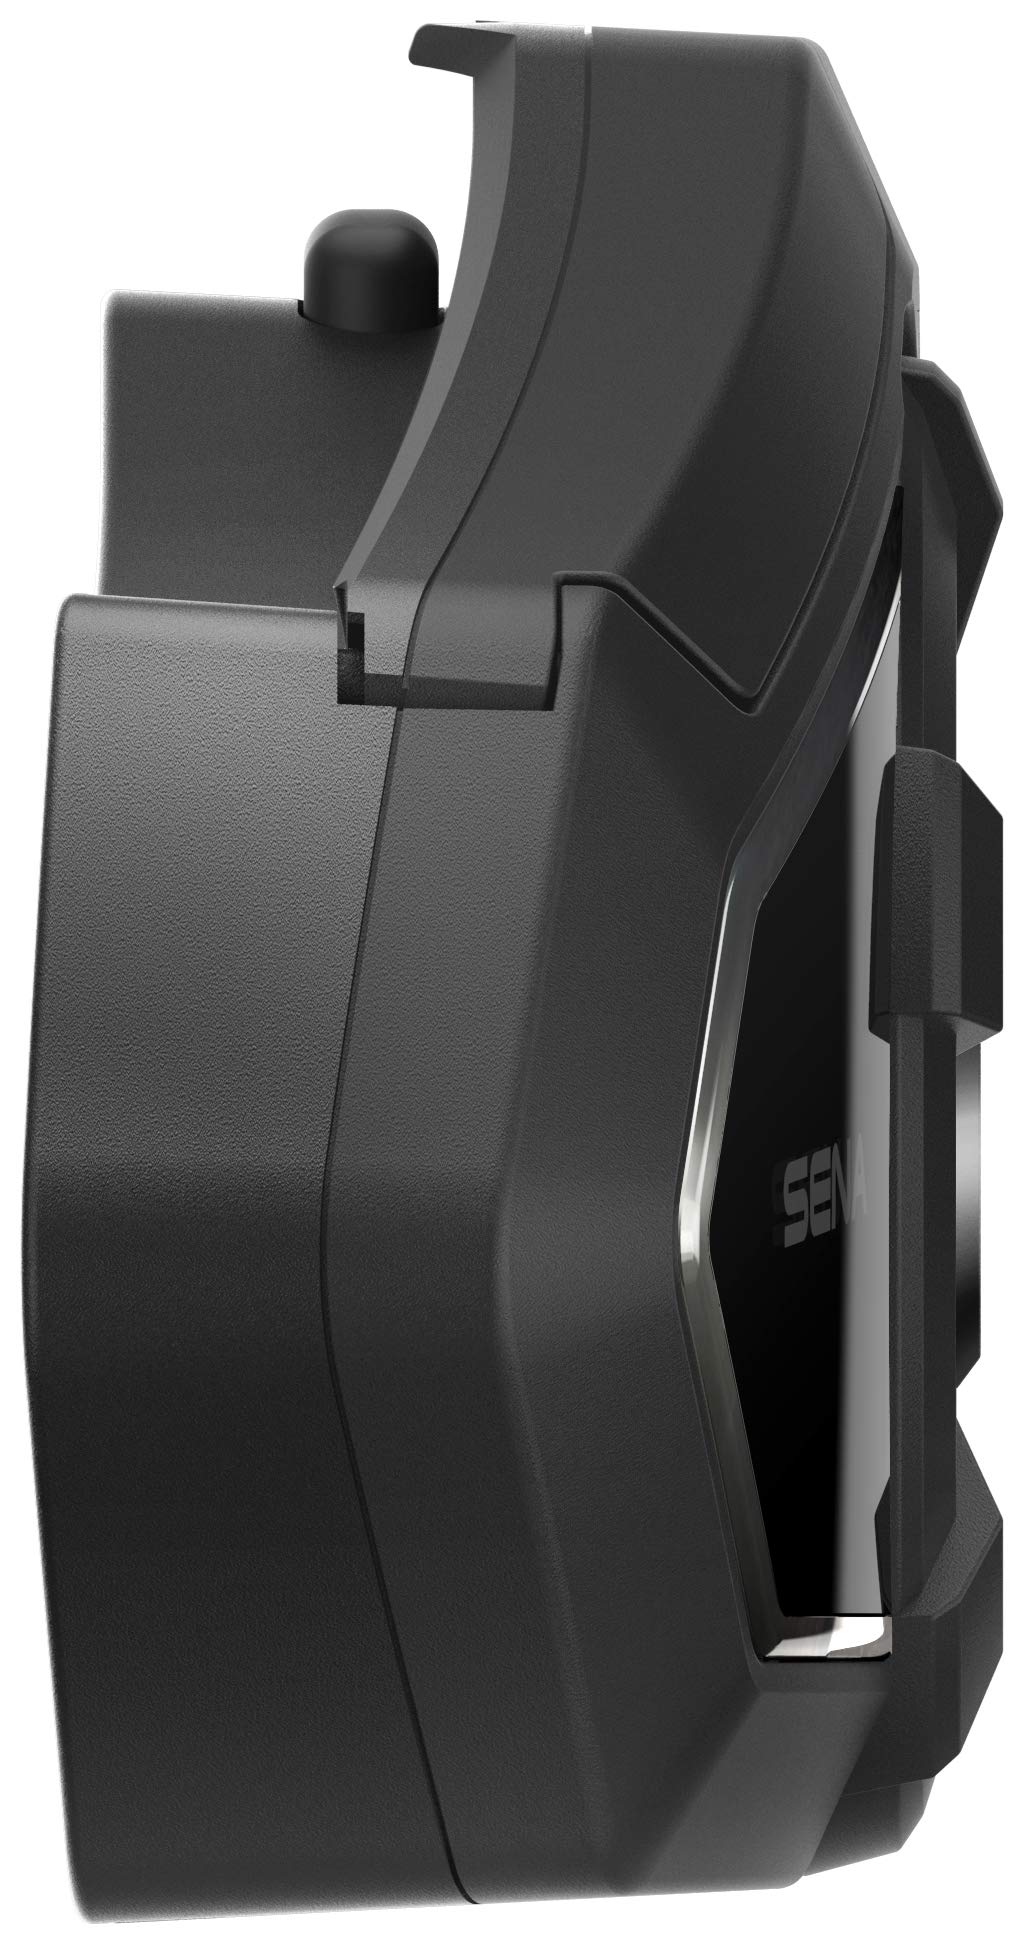 SENA 30K-01 Motorcycle Bluetooth Headset/Mesh Communication System (Single)